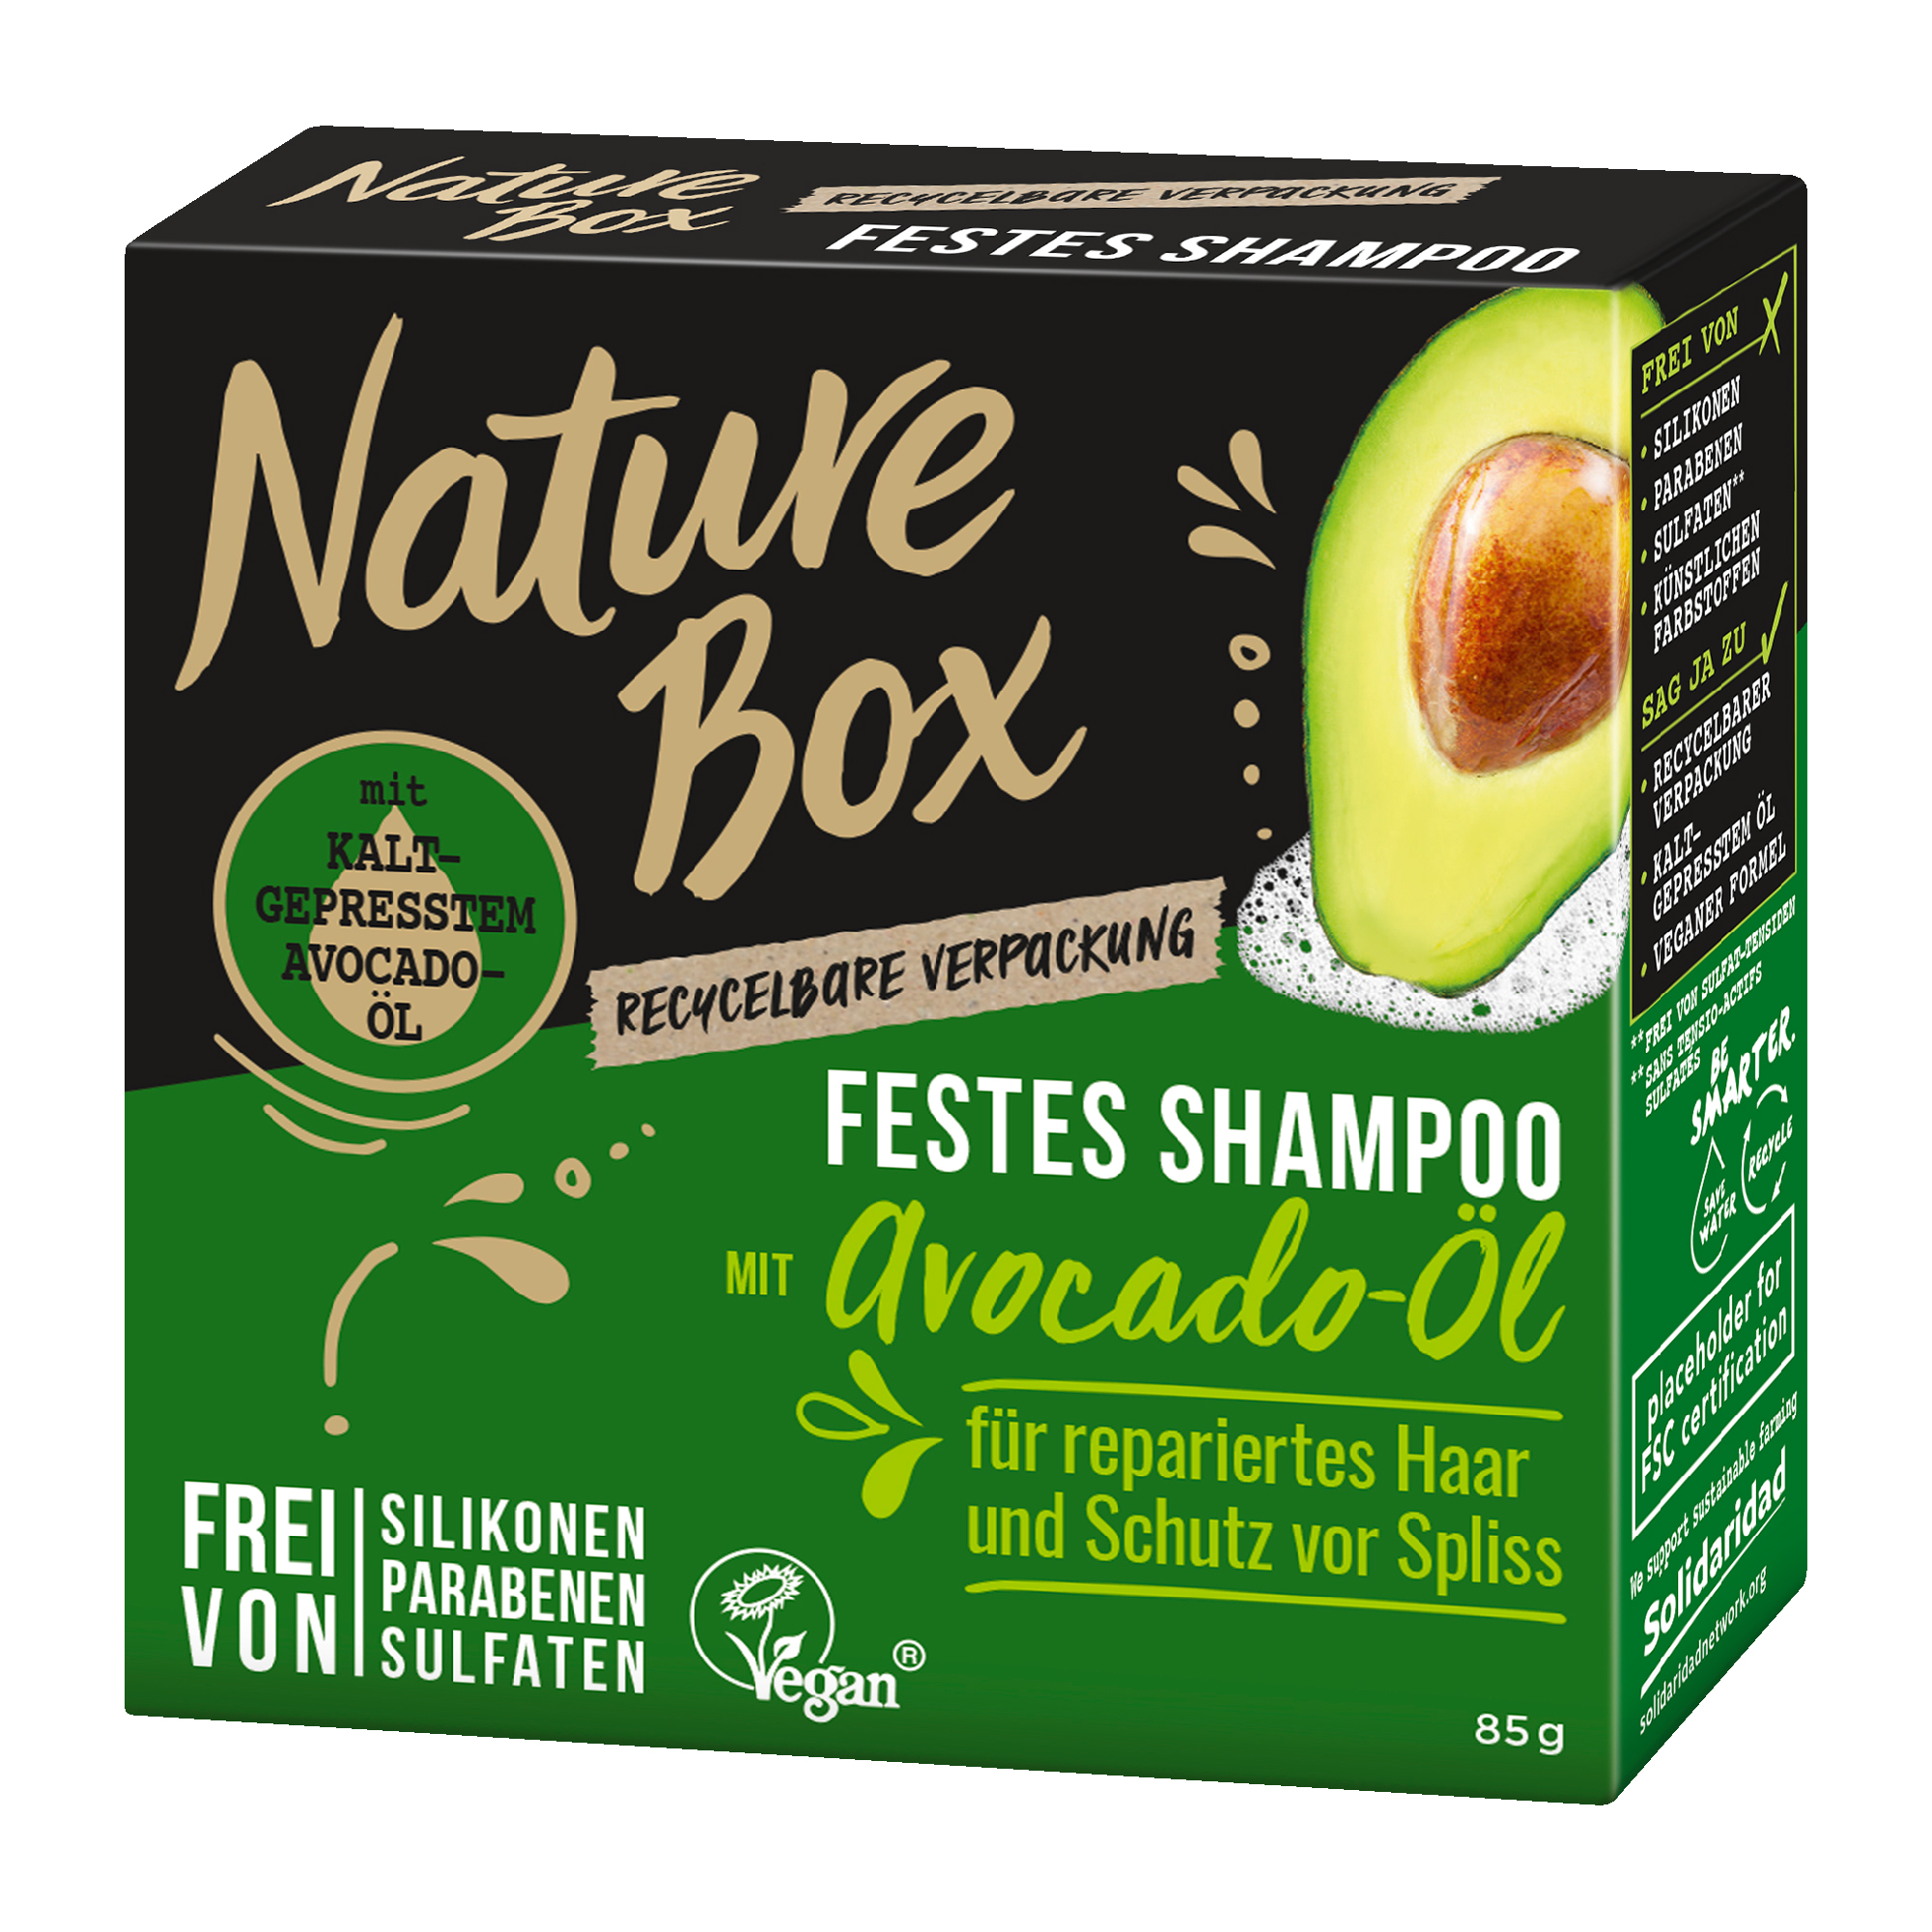 festes shampoo travel box